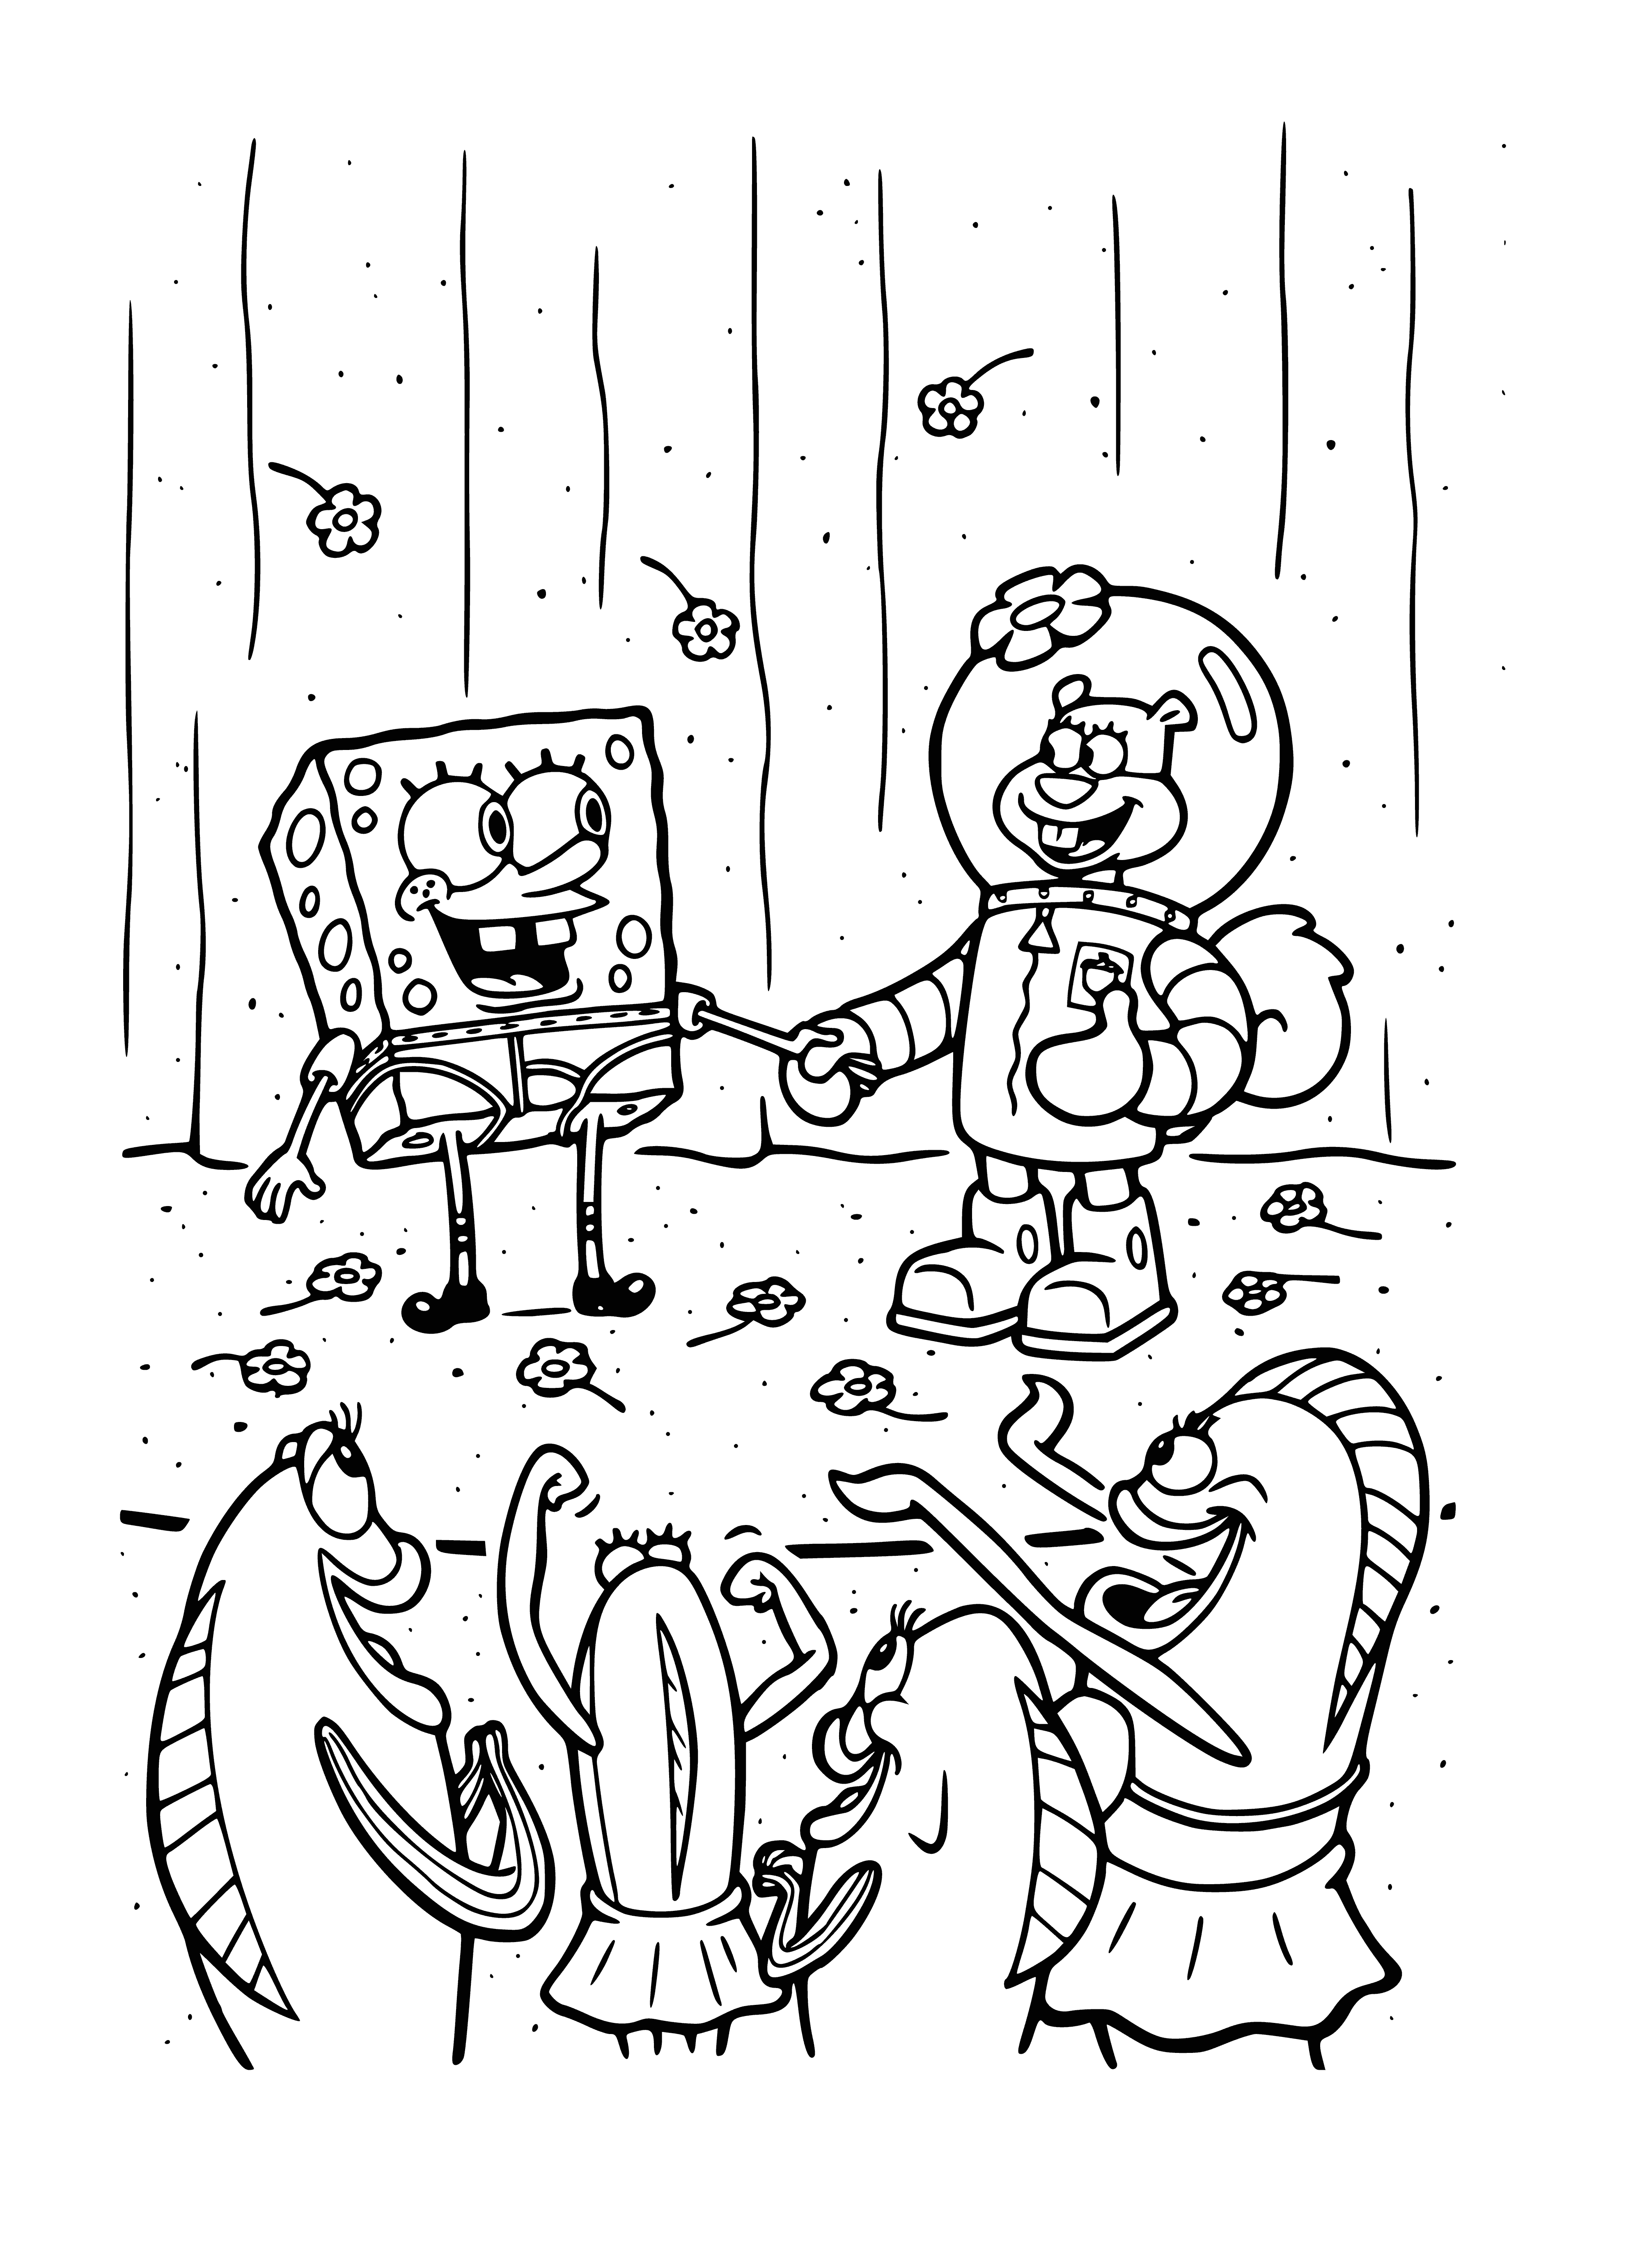 Bob and squirrel coloring page